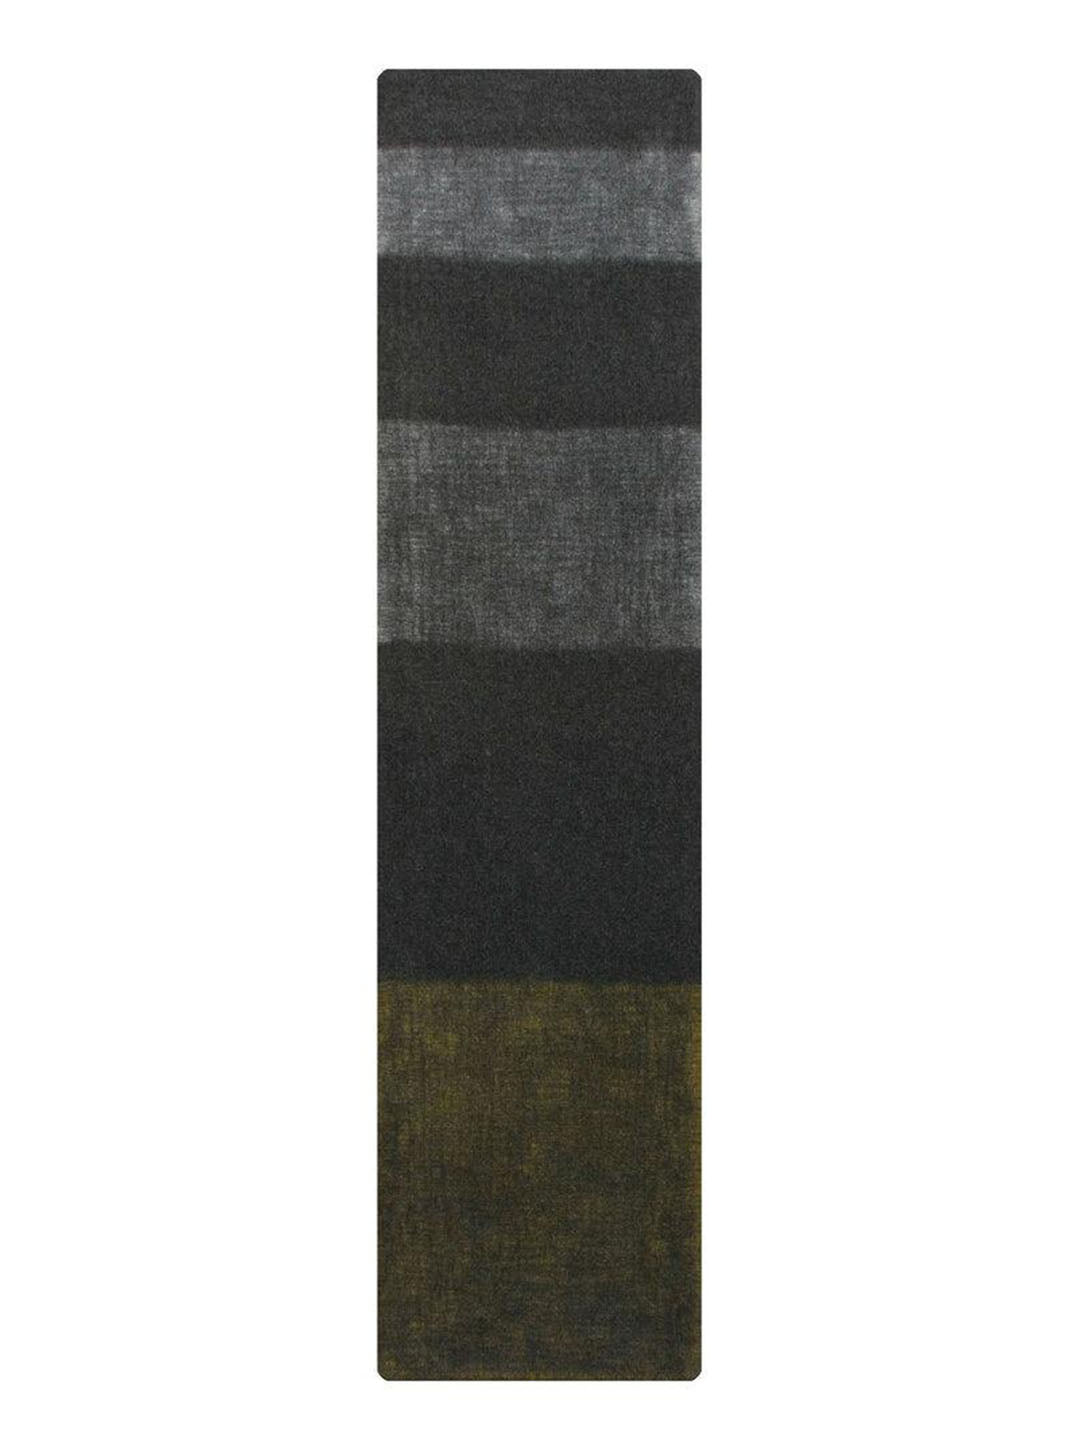 Block rug 2.5' x 10'